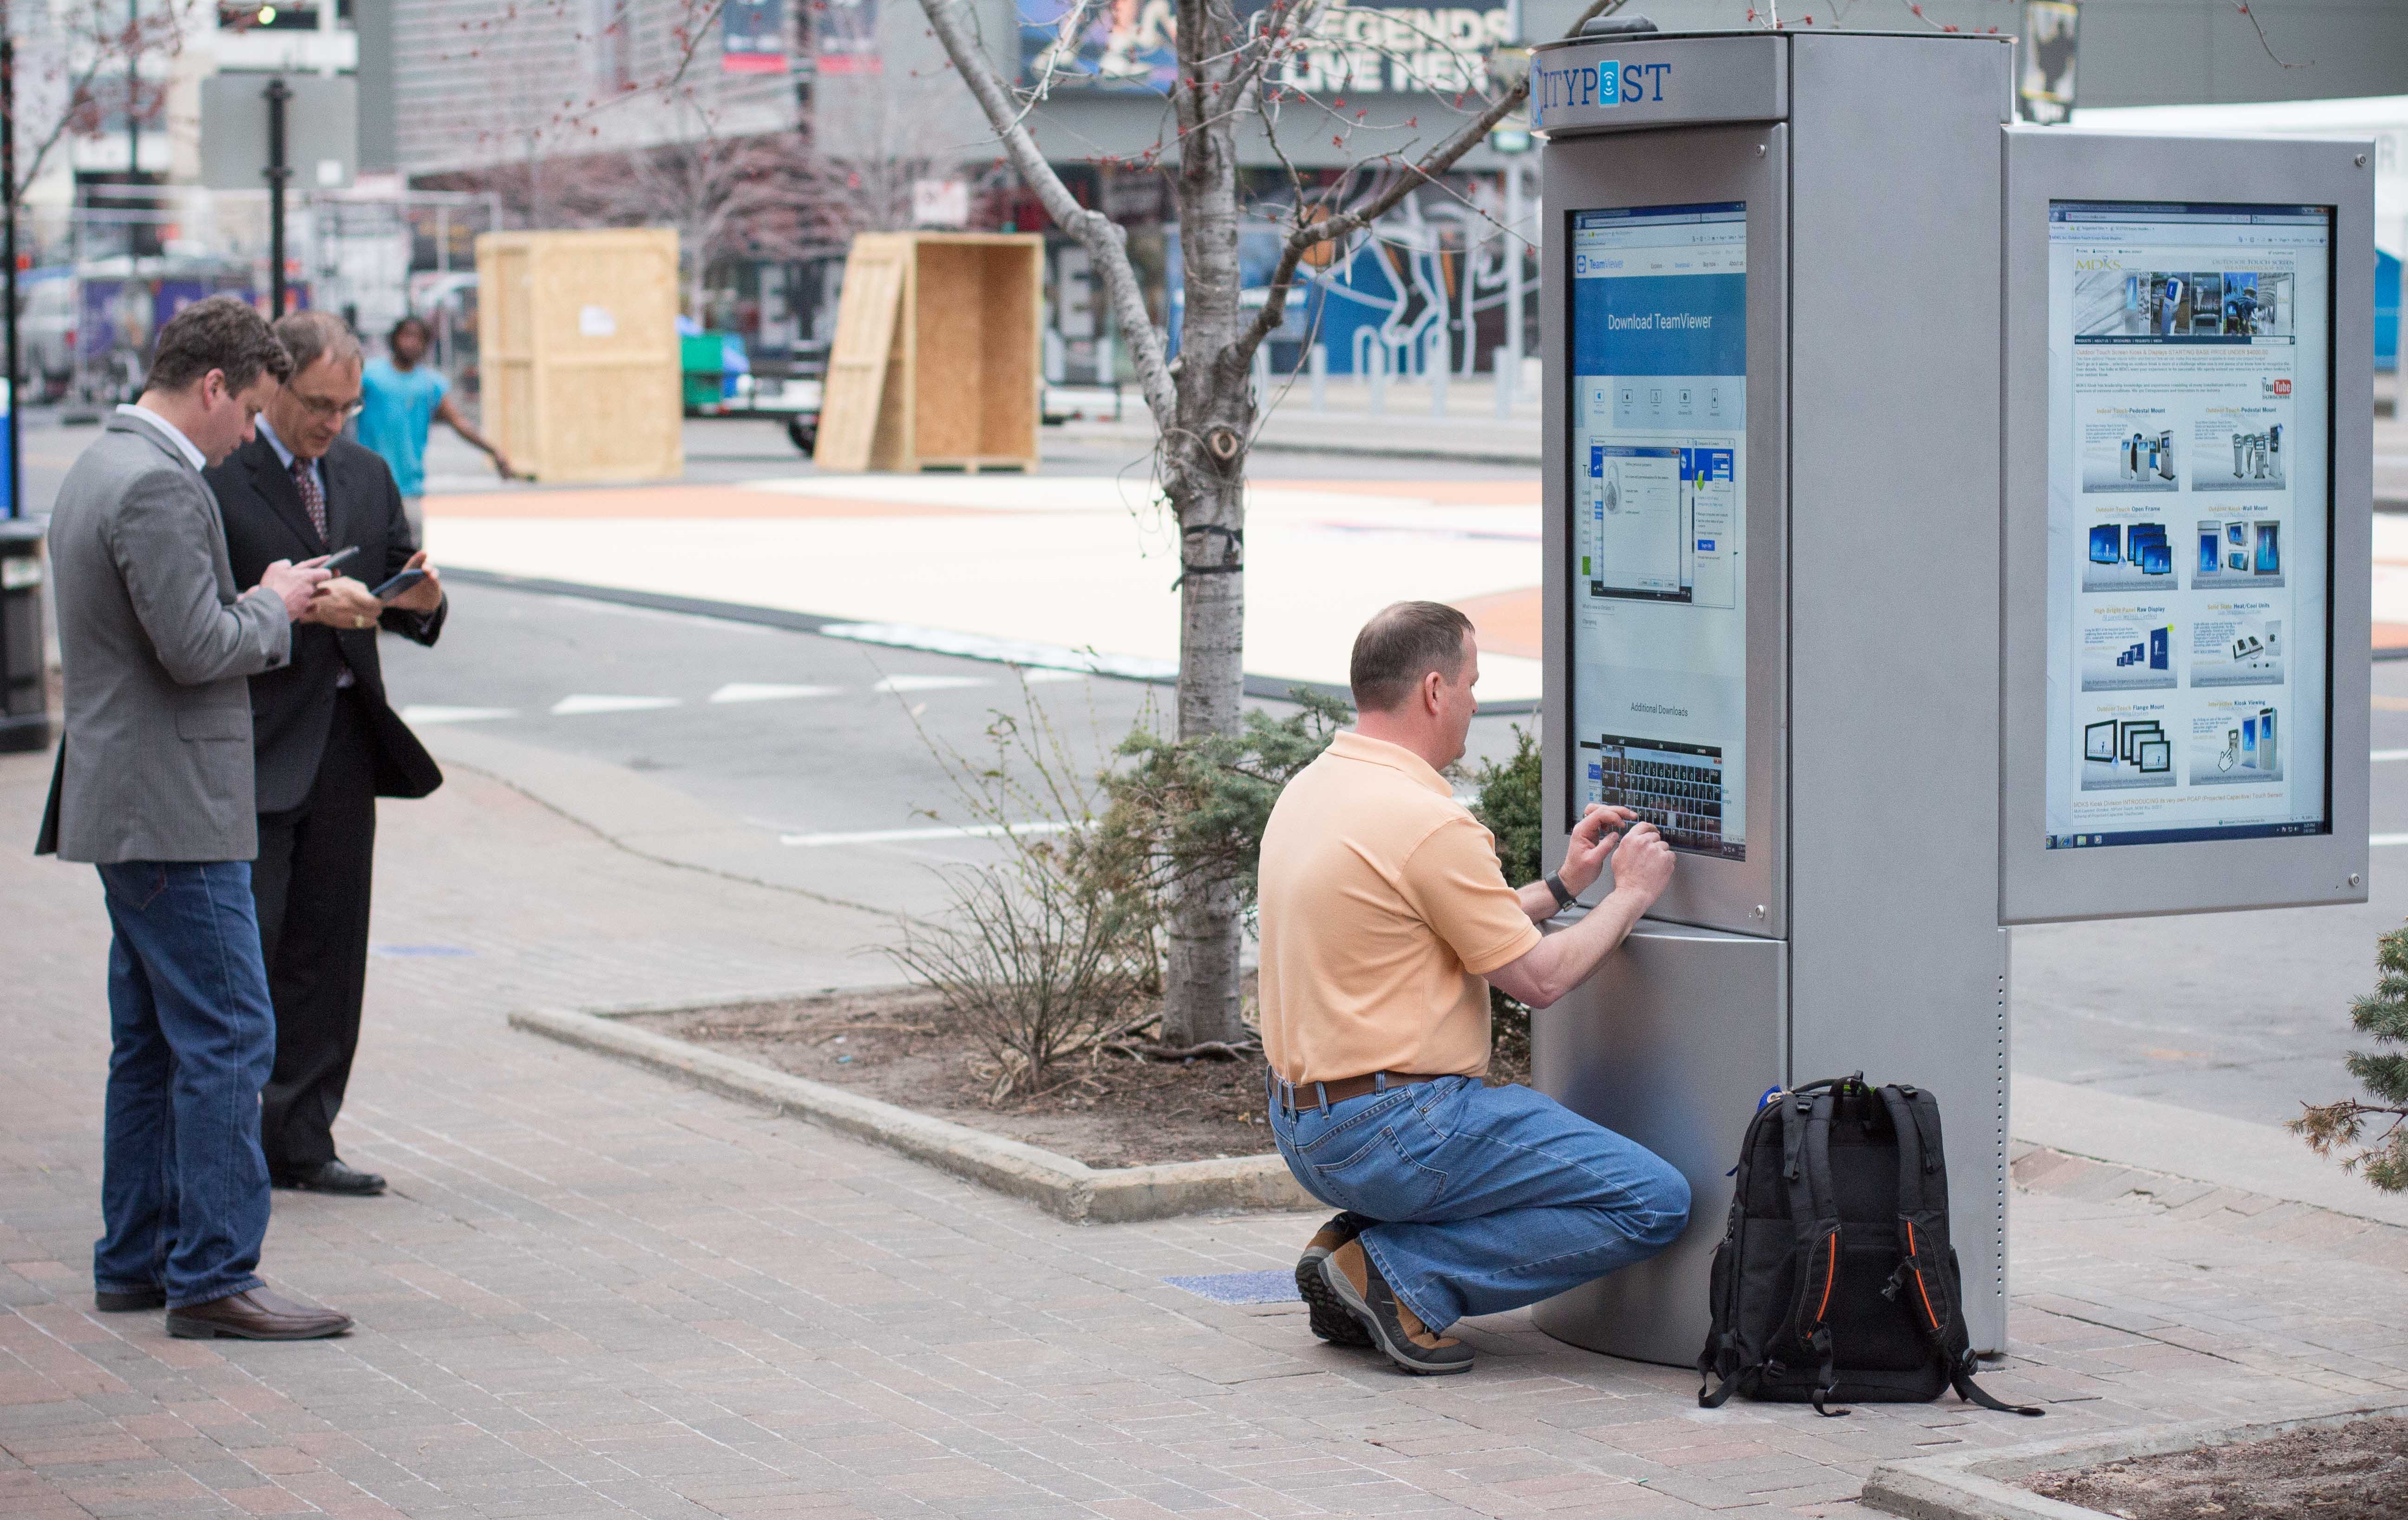 Kansas City’s Smart City taking shape with kiosks’ arrival